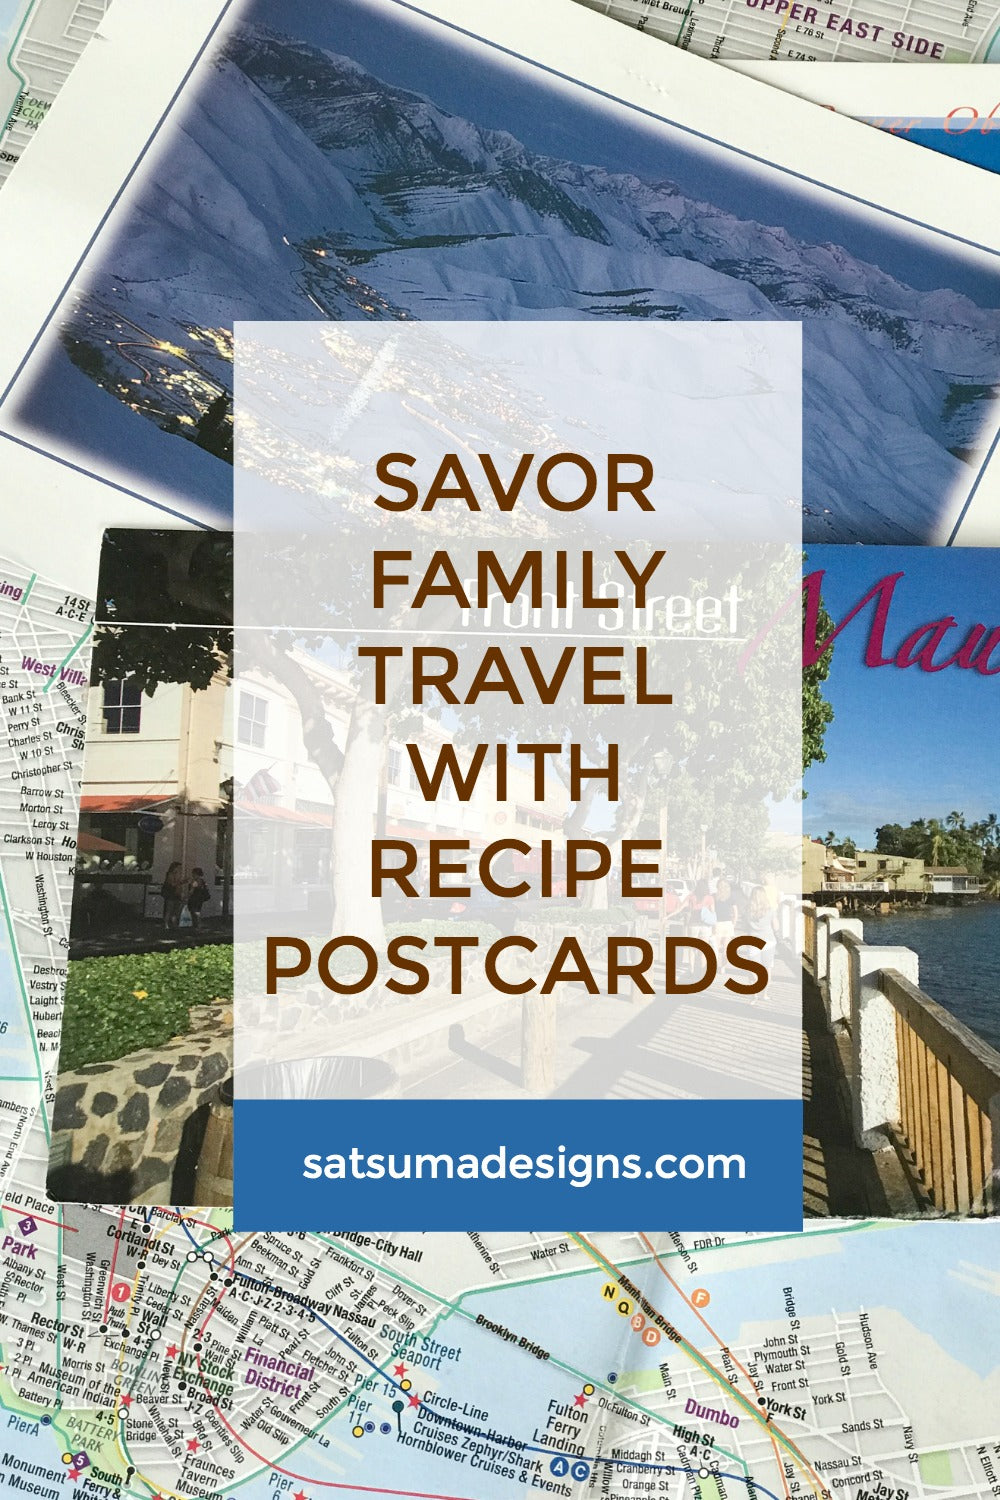 Savor Family Travel with Recipe Postcards